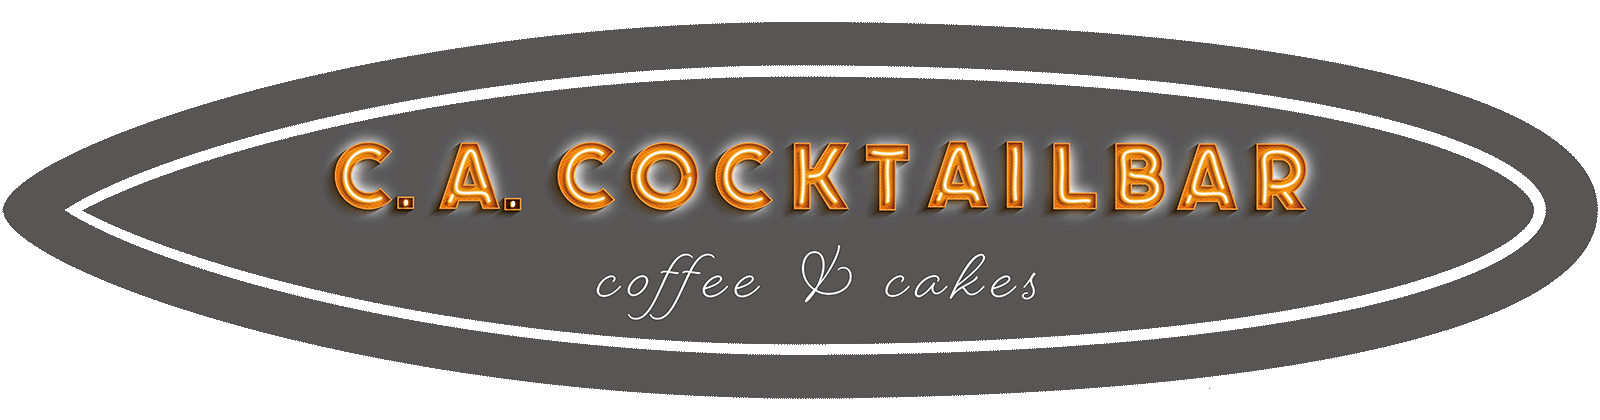 C.A.Cocktailbar - Coffee & Cakes